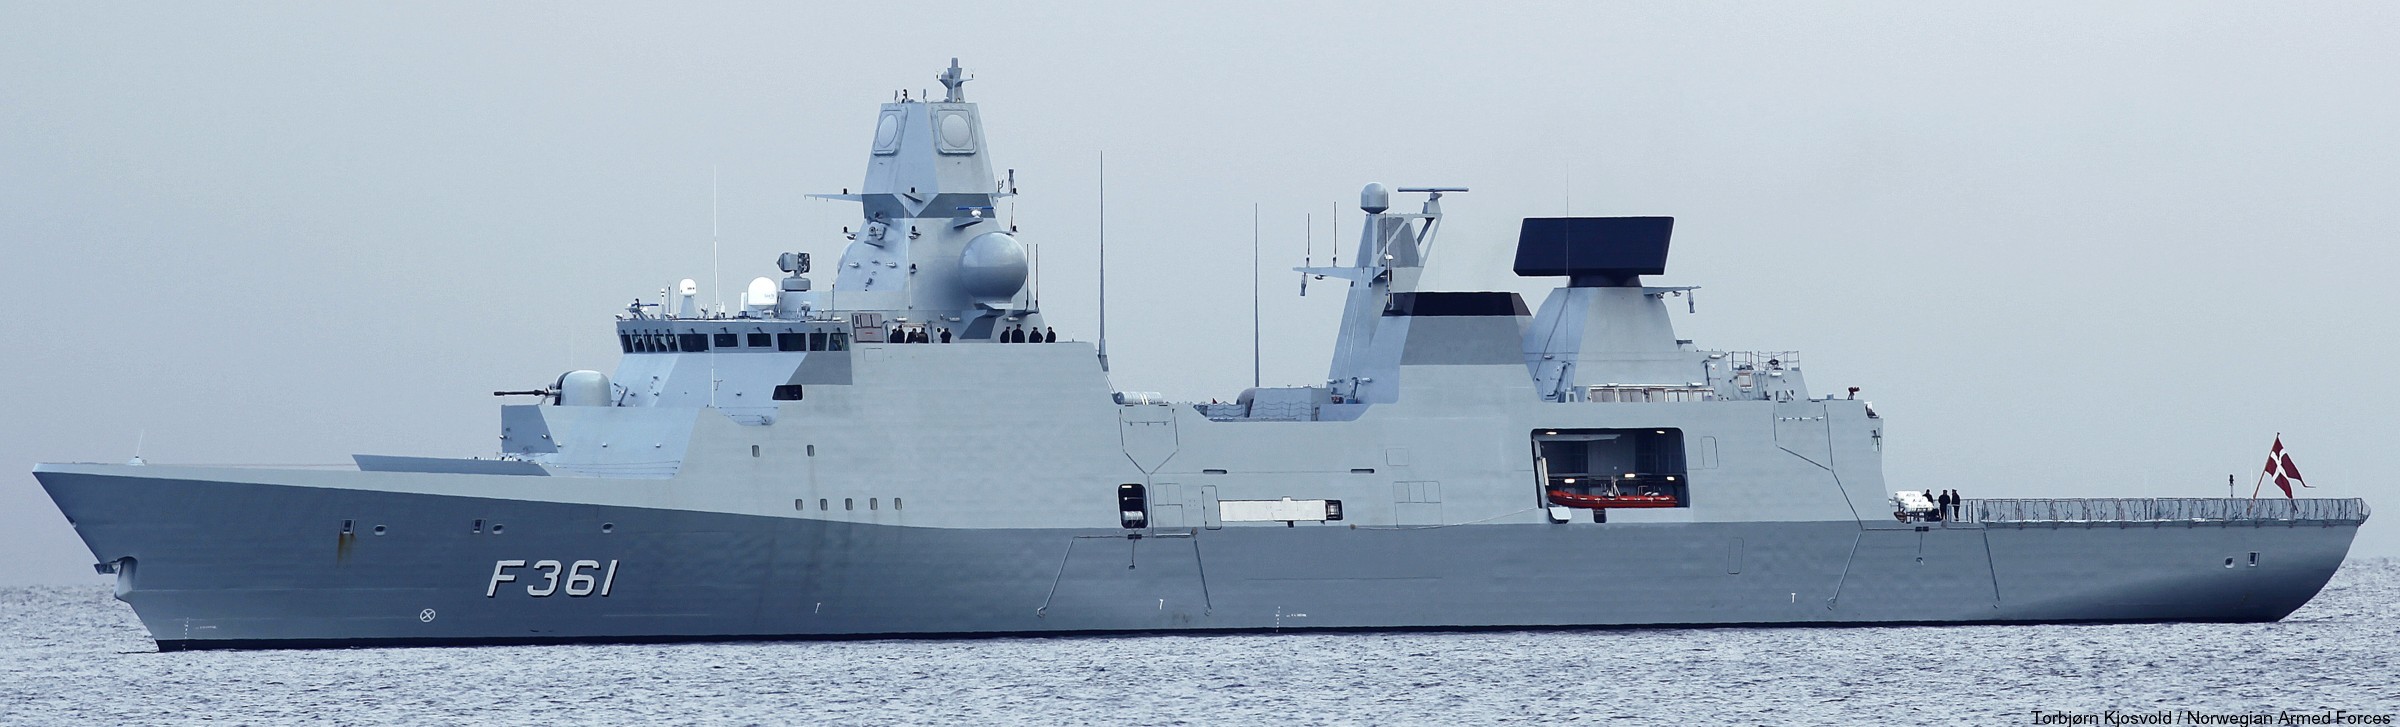 f-361 hdms iver huitfeldt class guided missile frigate ffg royal danish navy 05